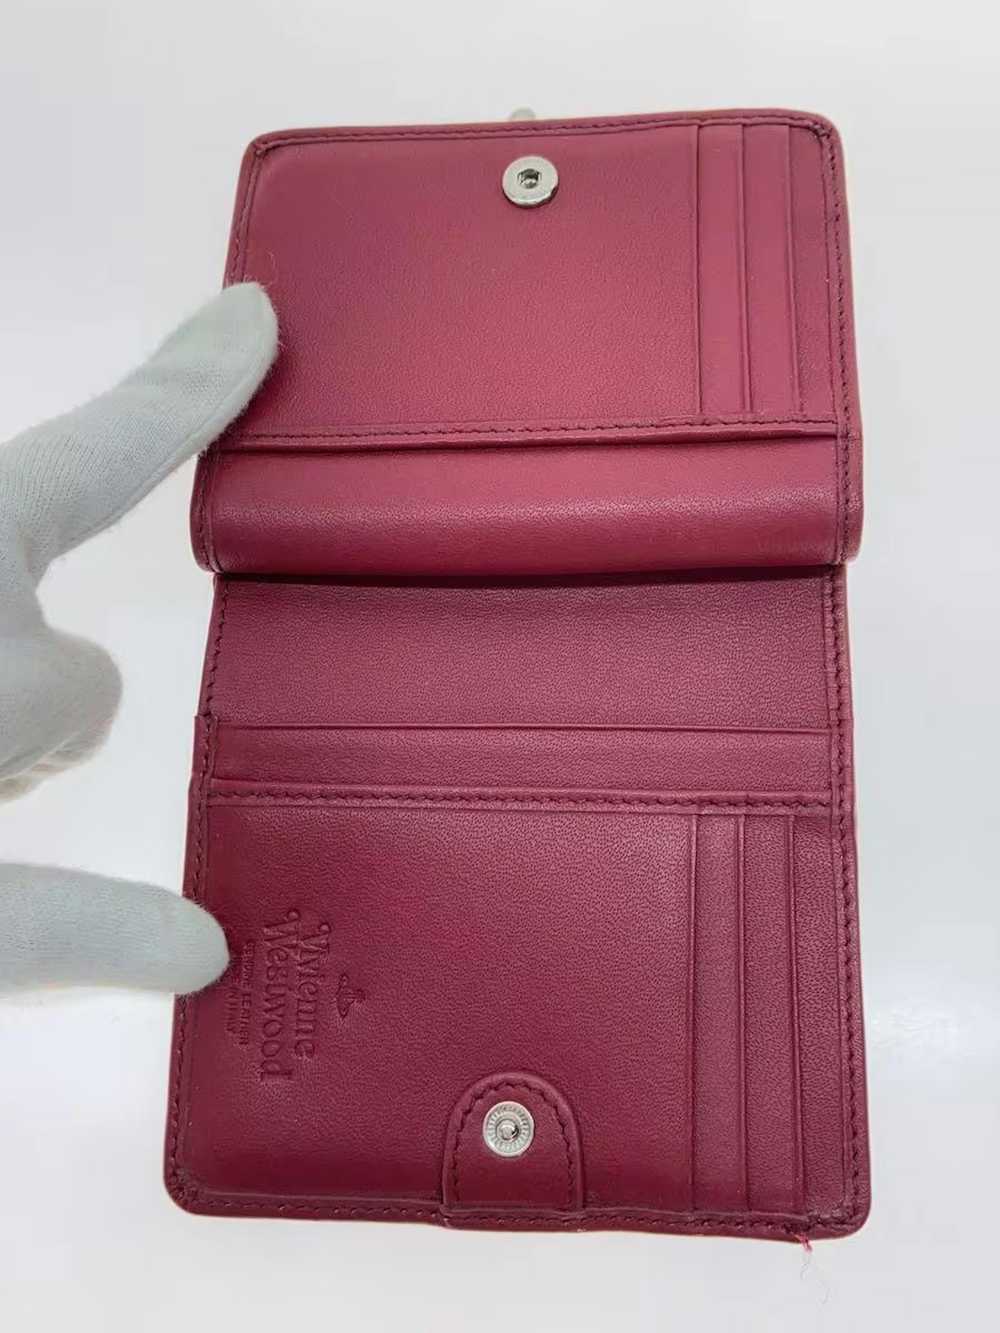 Vivienne Westwood Orb Badge Leather Wallet - image 3